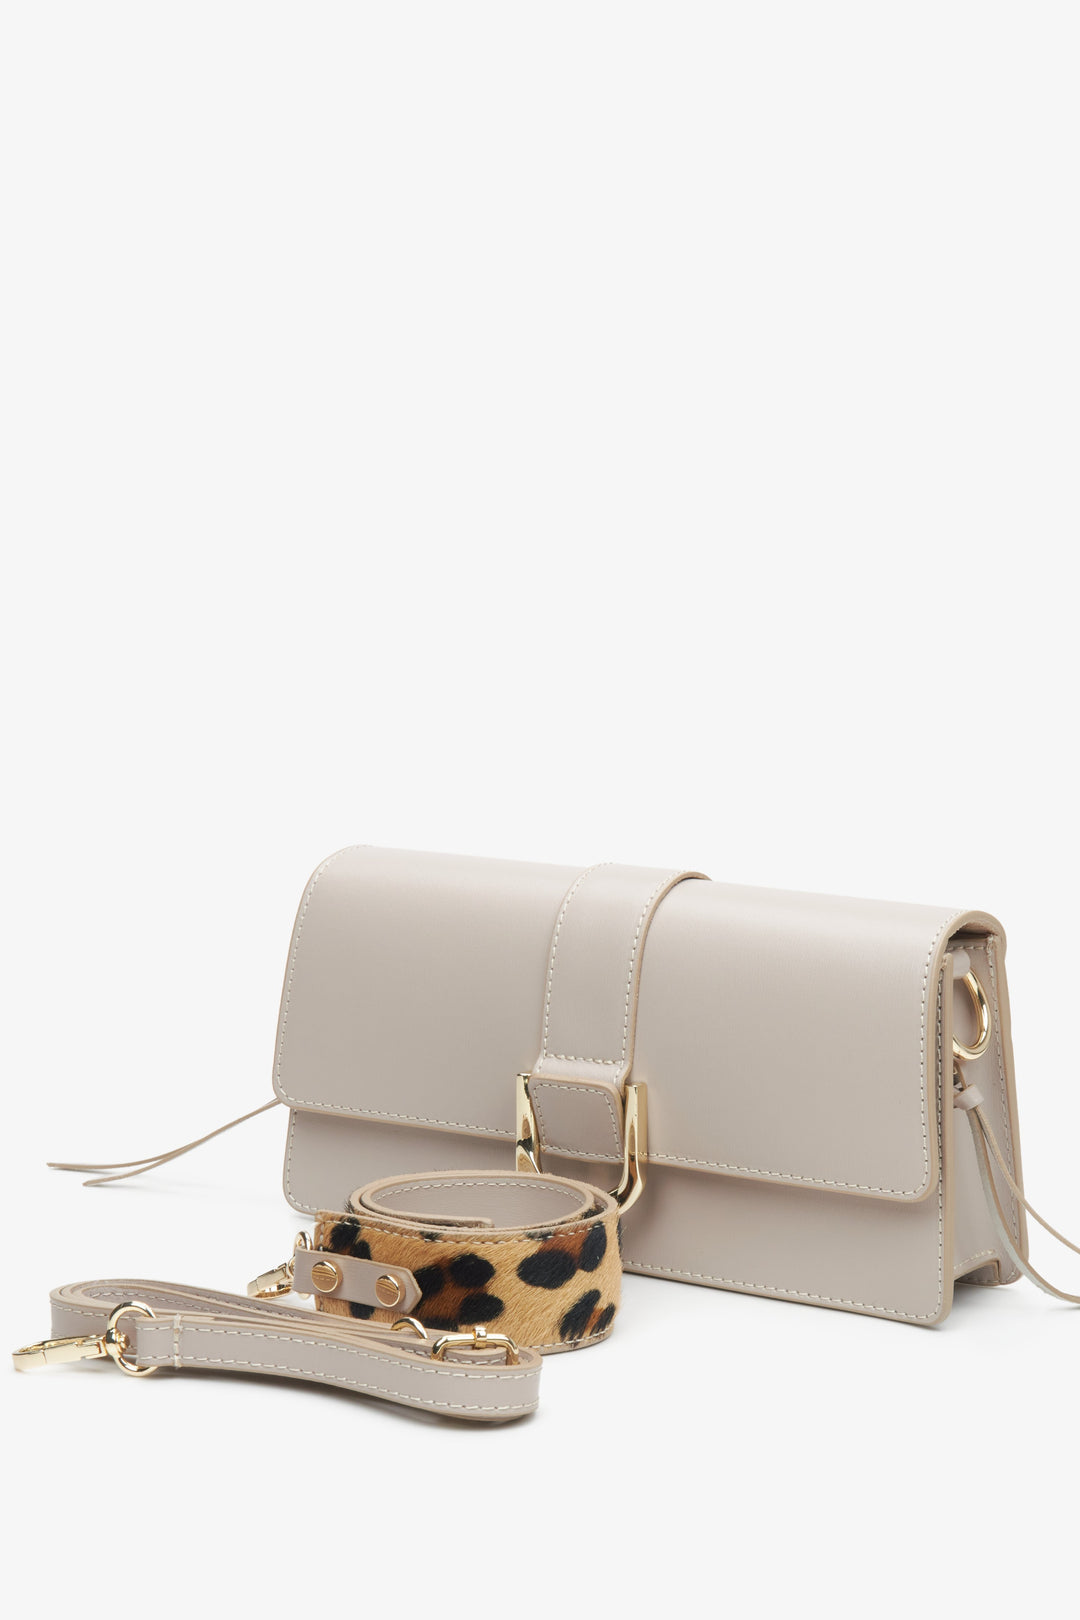 Women's beige handbag Estro with animal prints.